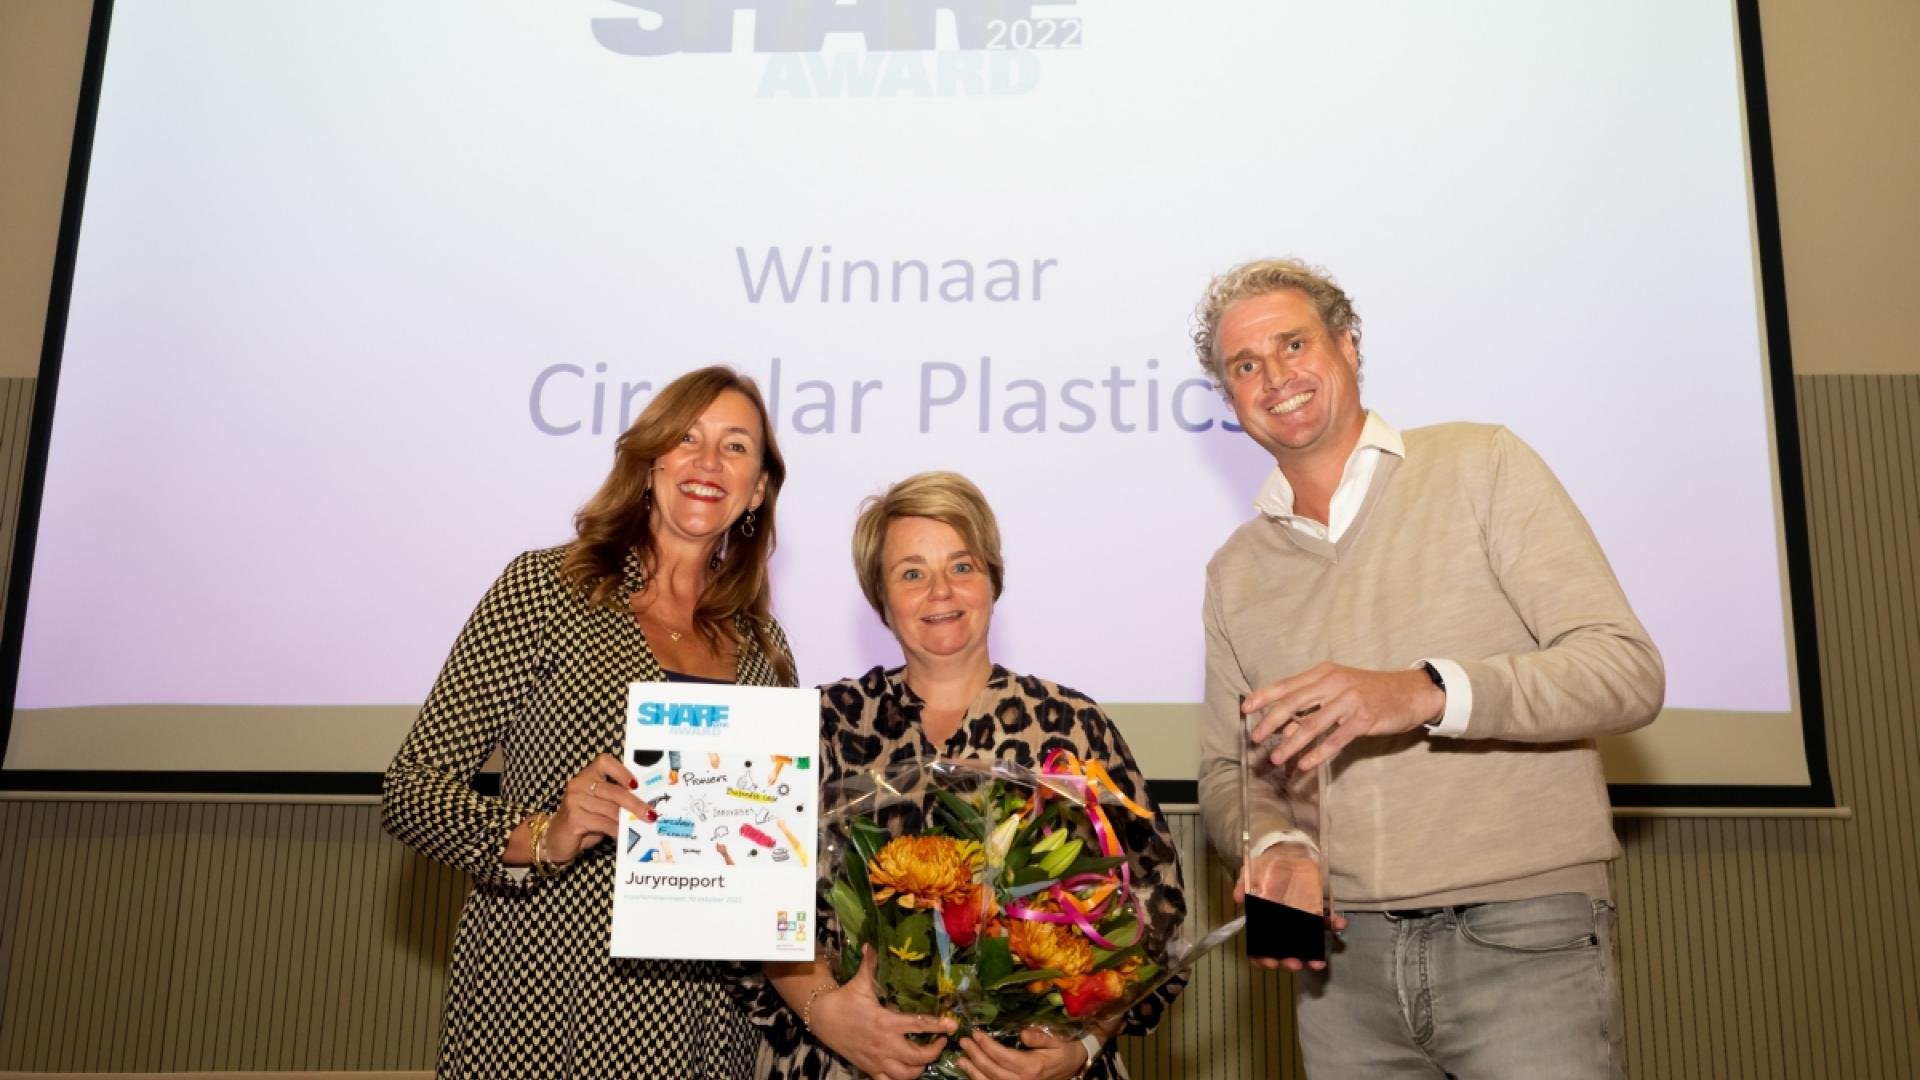 De winnaar van de SHARE Meets Award 2022, Circular Plastics